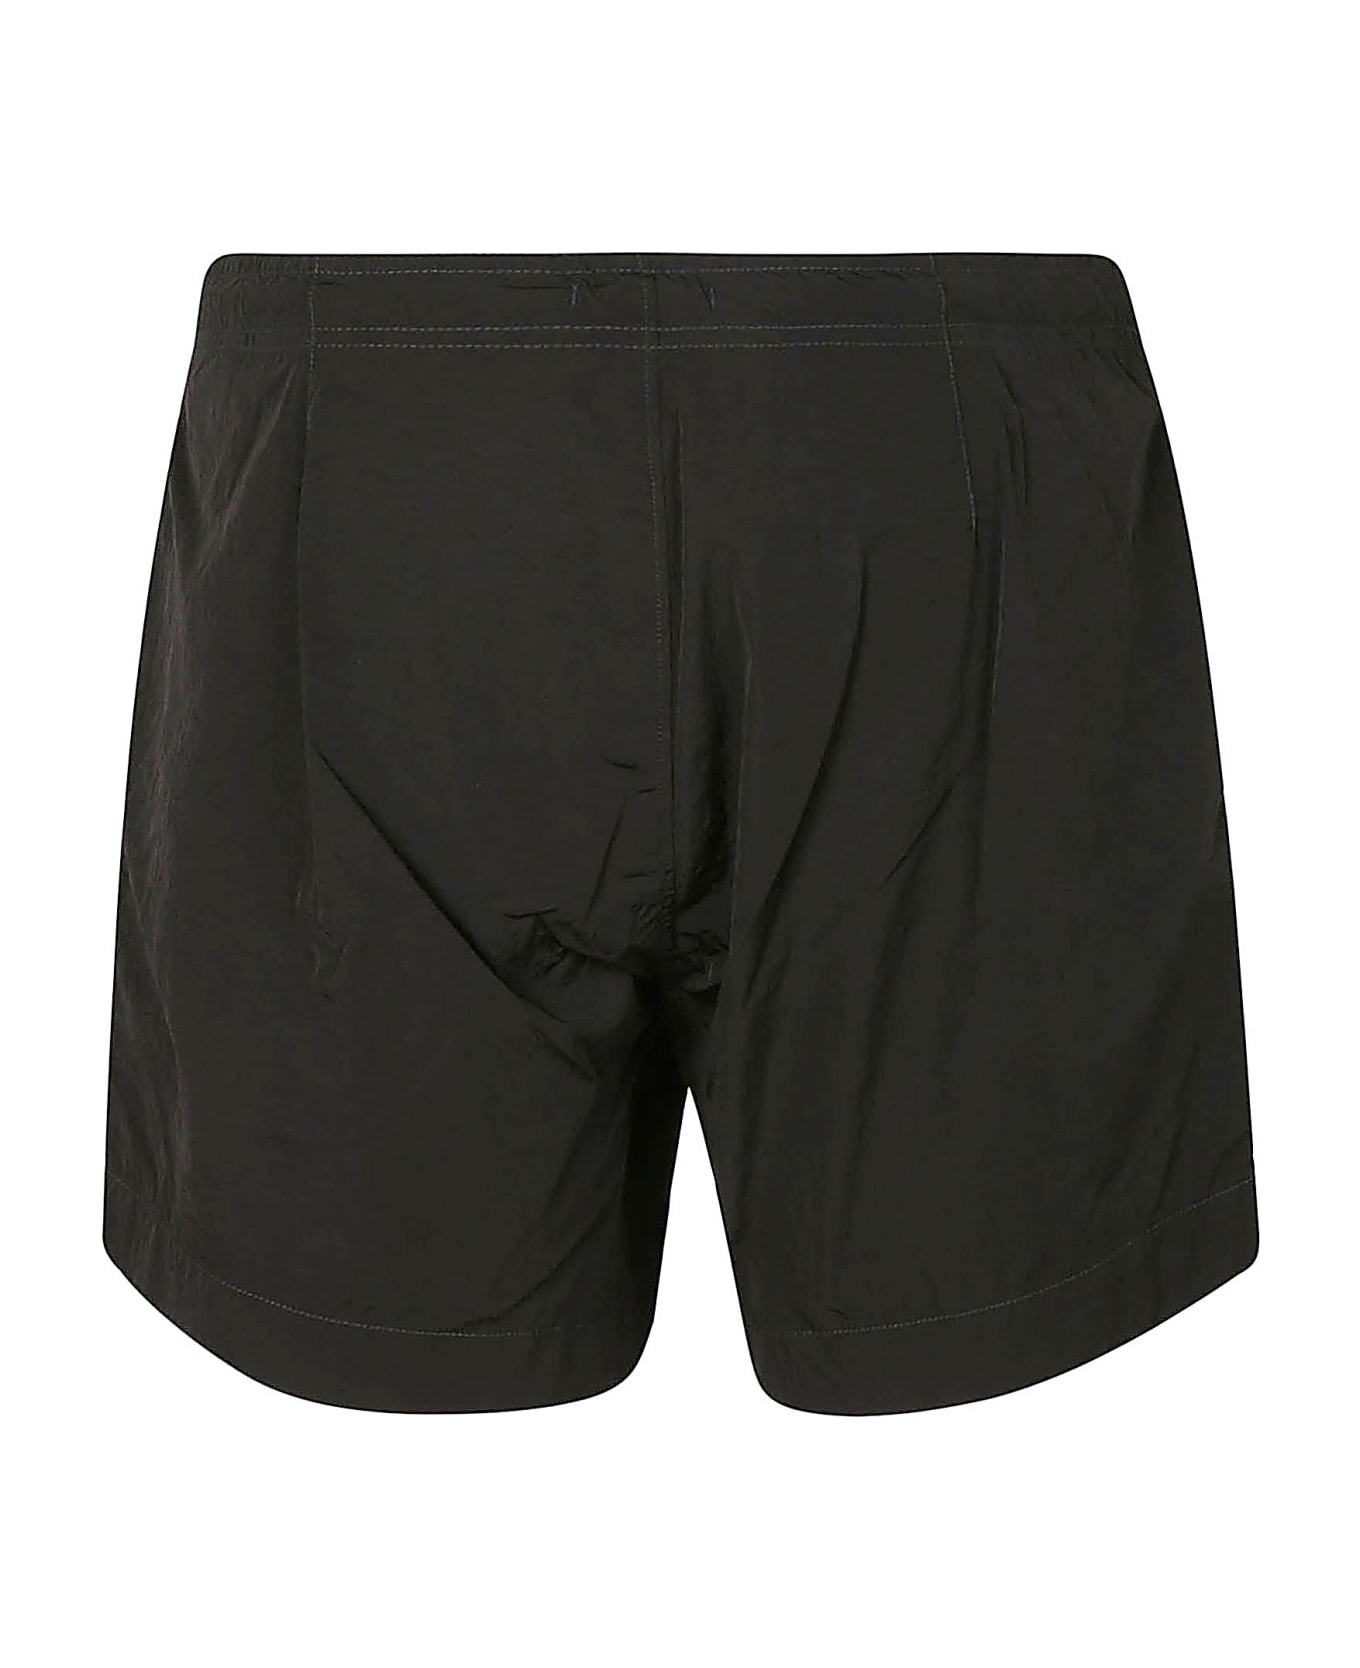 C.P. Company Eco-chrome R Boxer Shorts - Black ショートパンツ